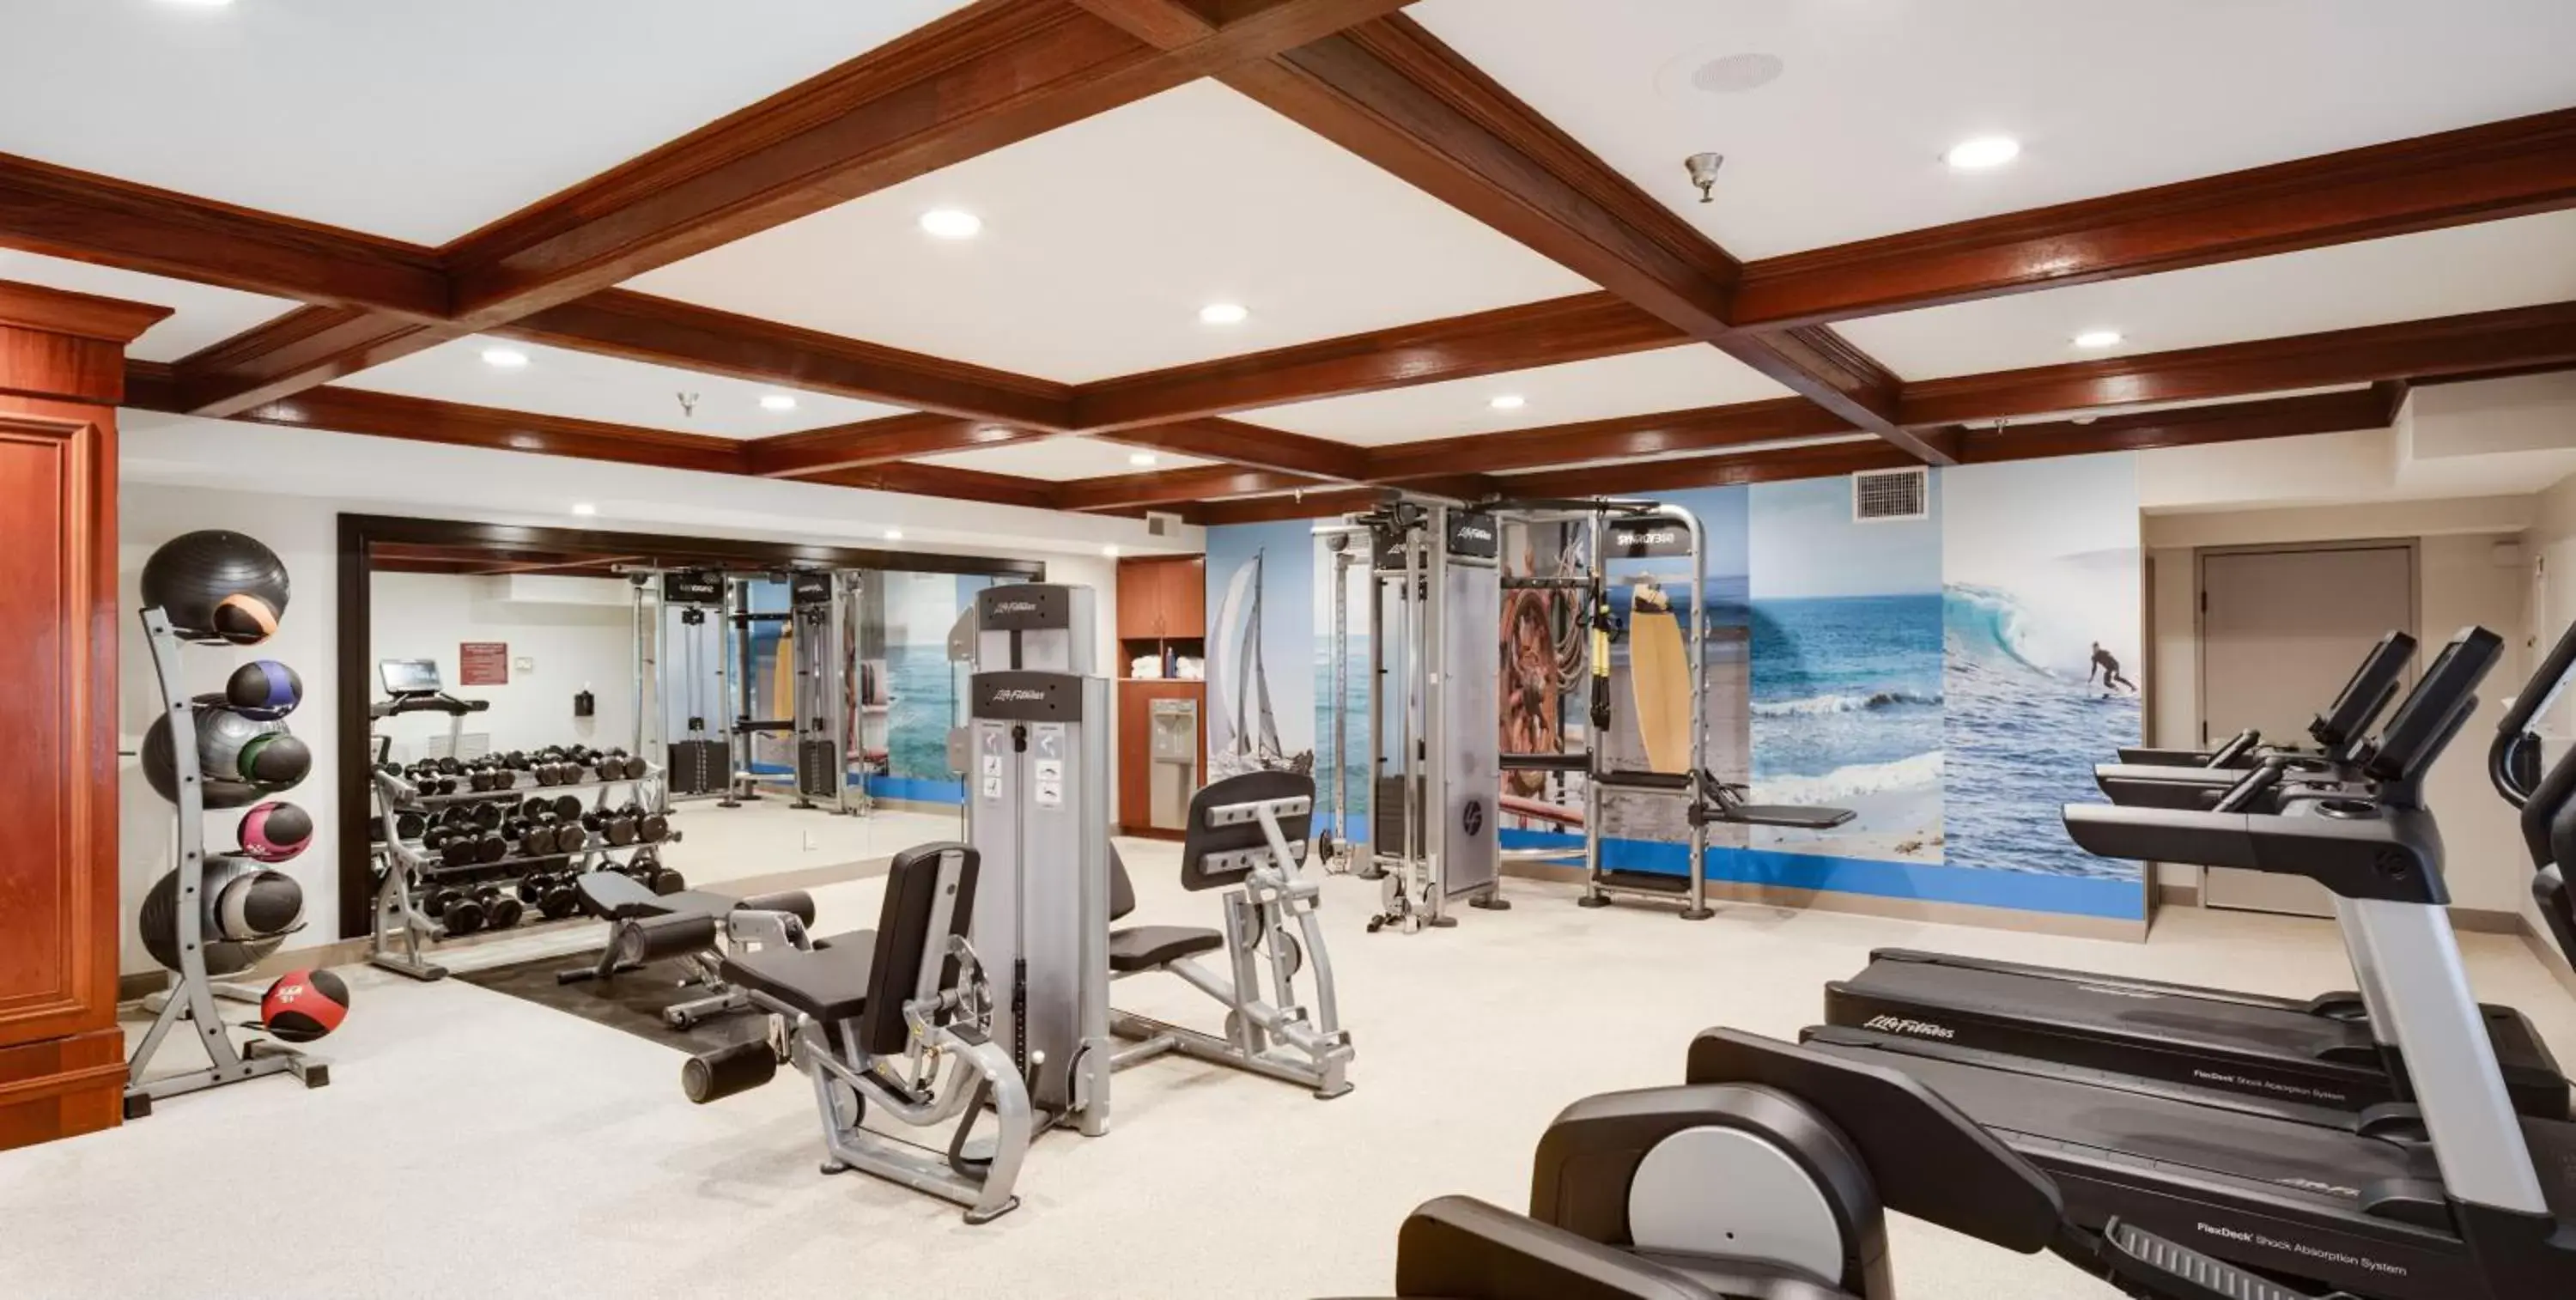 Fitness centre/facilities, Fitness Center/Facilities in Ayres Hotel Costa Mesa Newport Beach